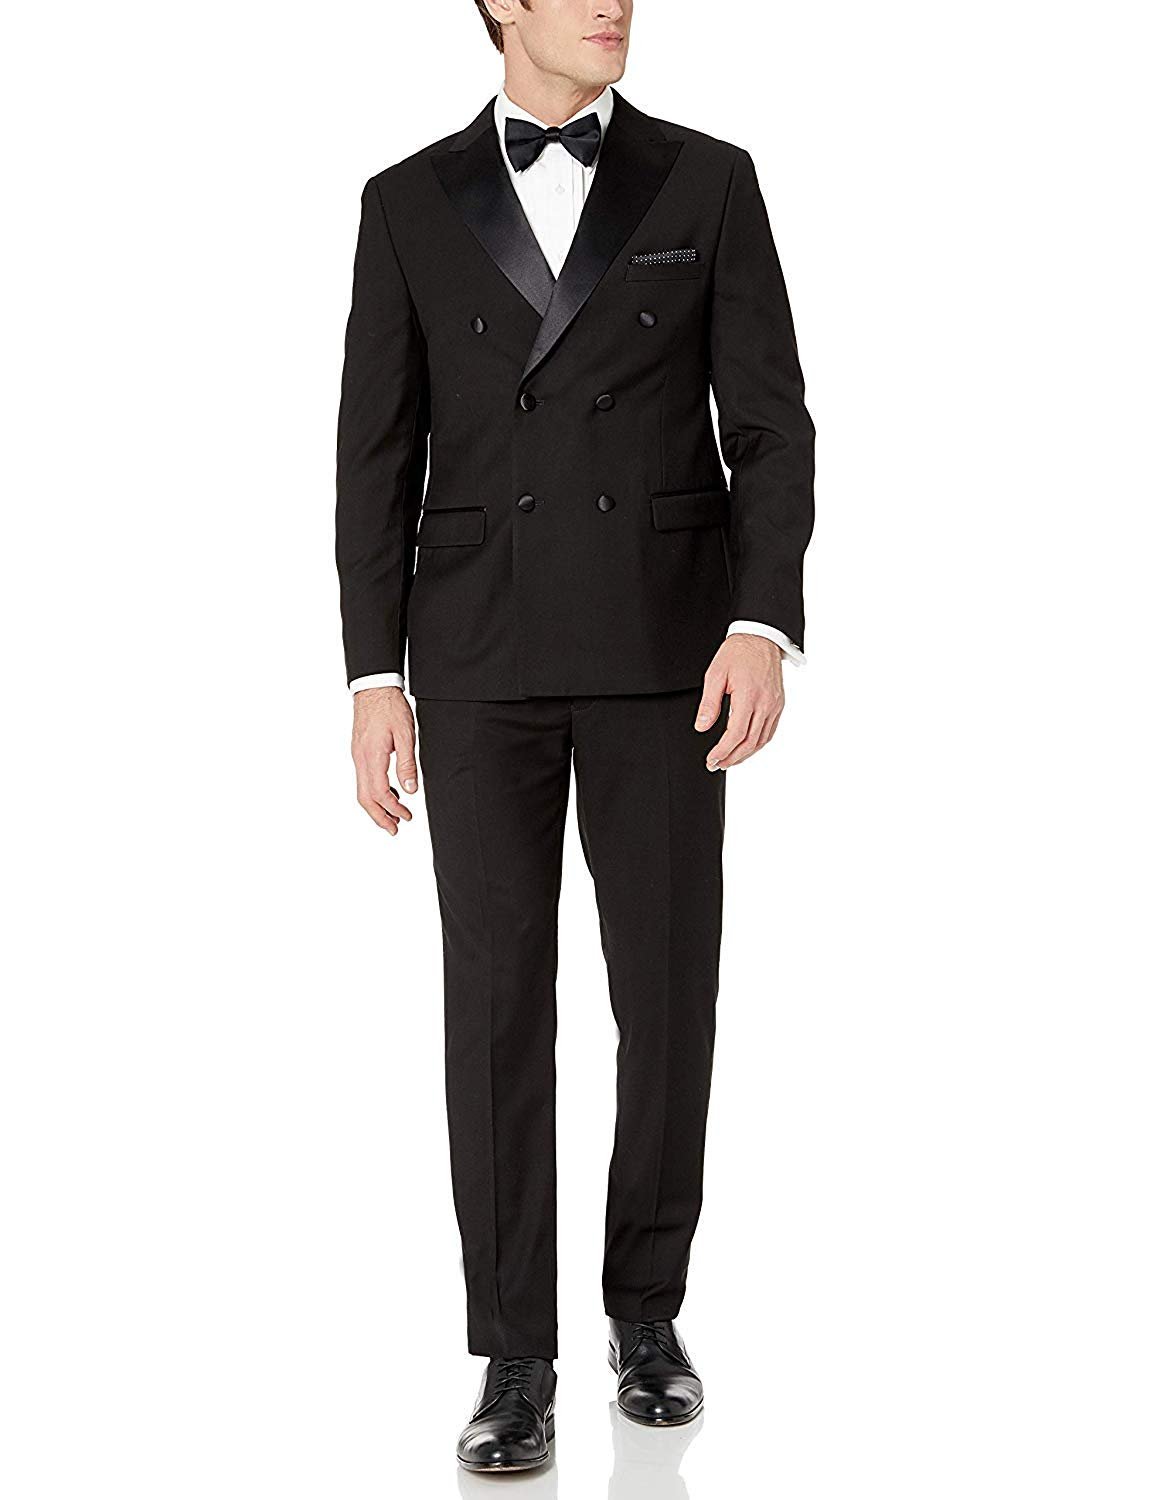 Adam Baker Men's 91003 Regular Fit 2-Piece Double Breasted Shawl Collar Tuxedo - Black - 38S - image 1 of 5